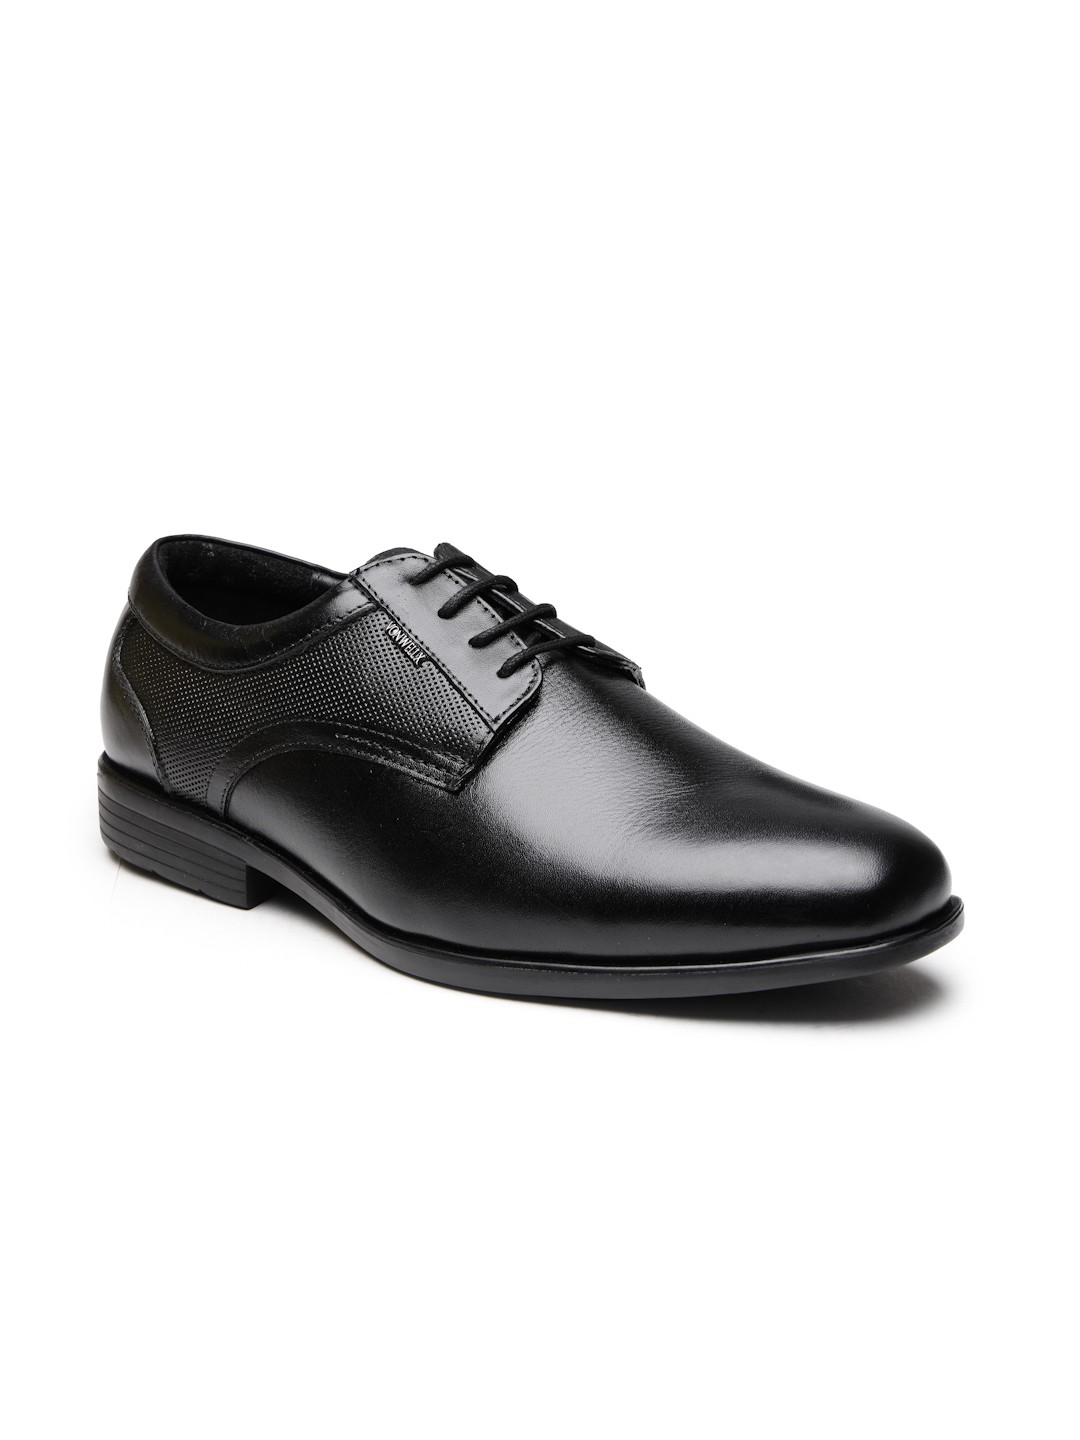 Buy Von Wellx Germany Comfort Men's Black Formal Shoes Jack Online in Lucknow